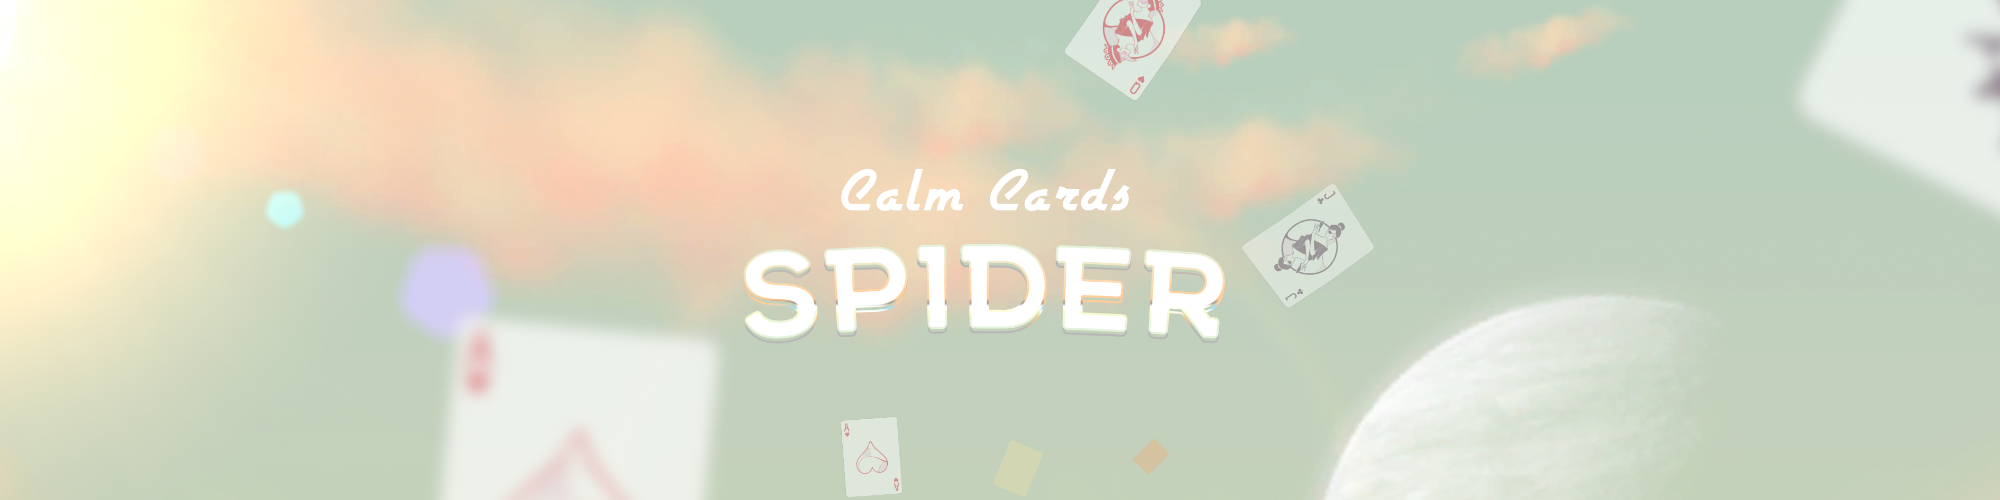 Calm Cards - Spider